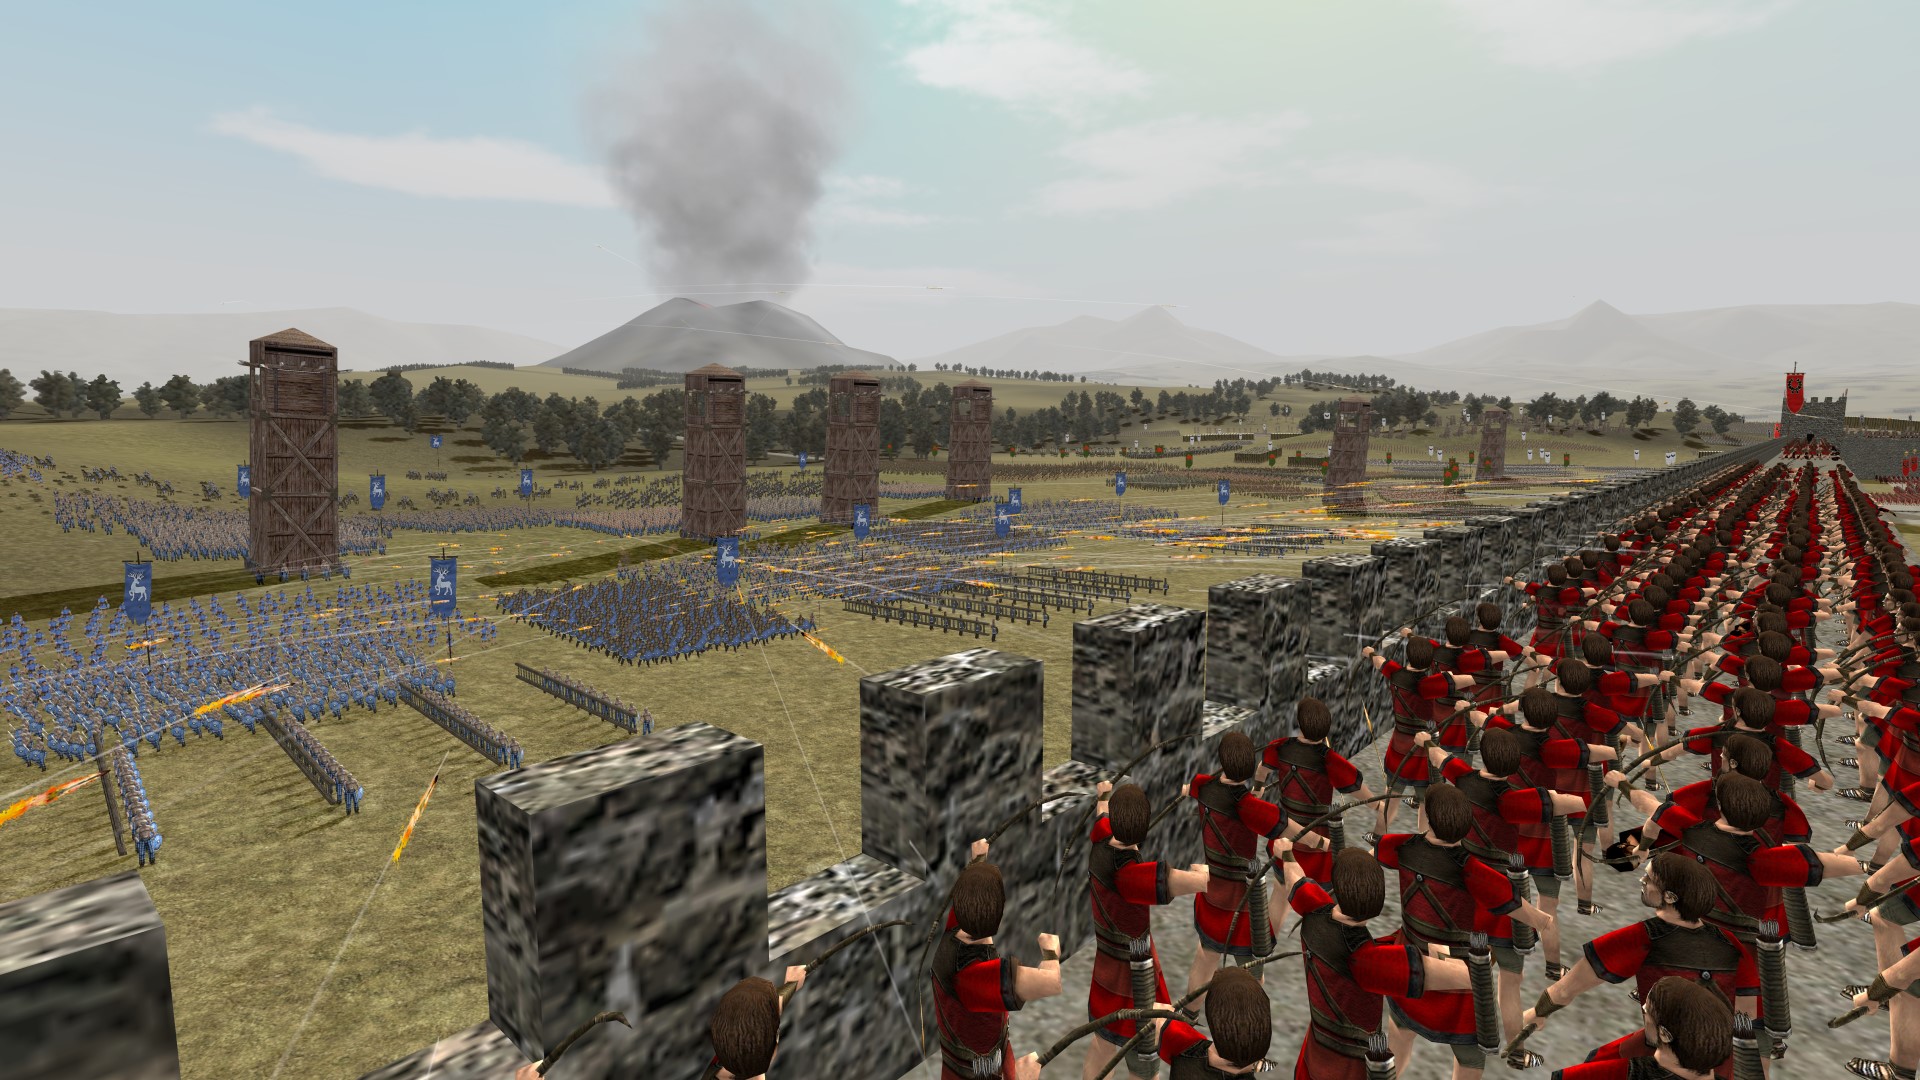 Total War: ROME – The Board Game, Board Game